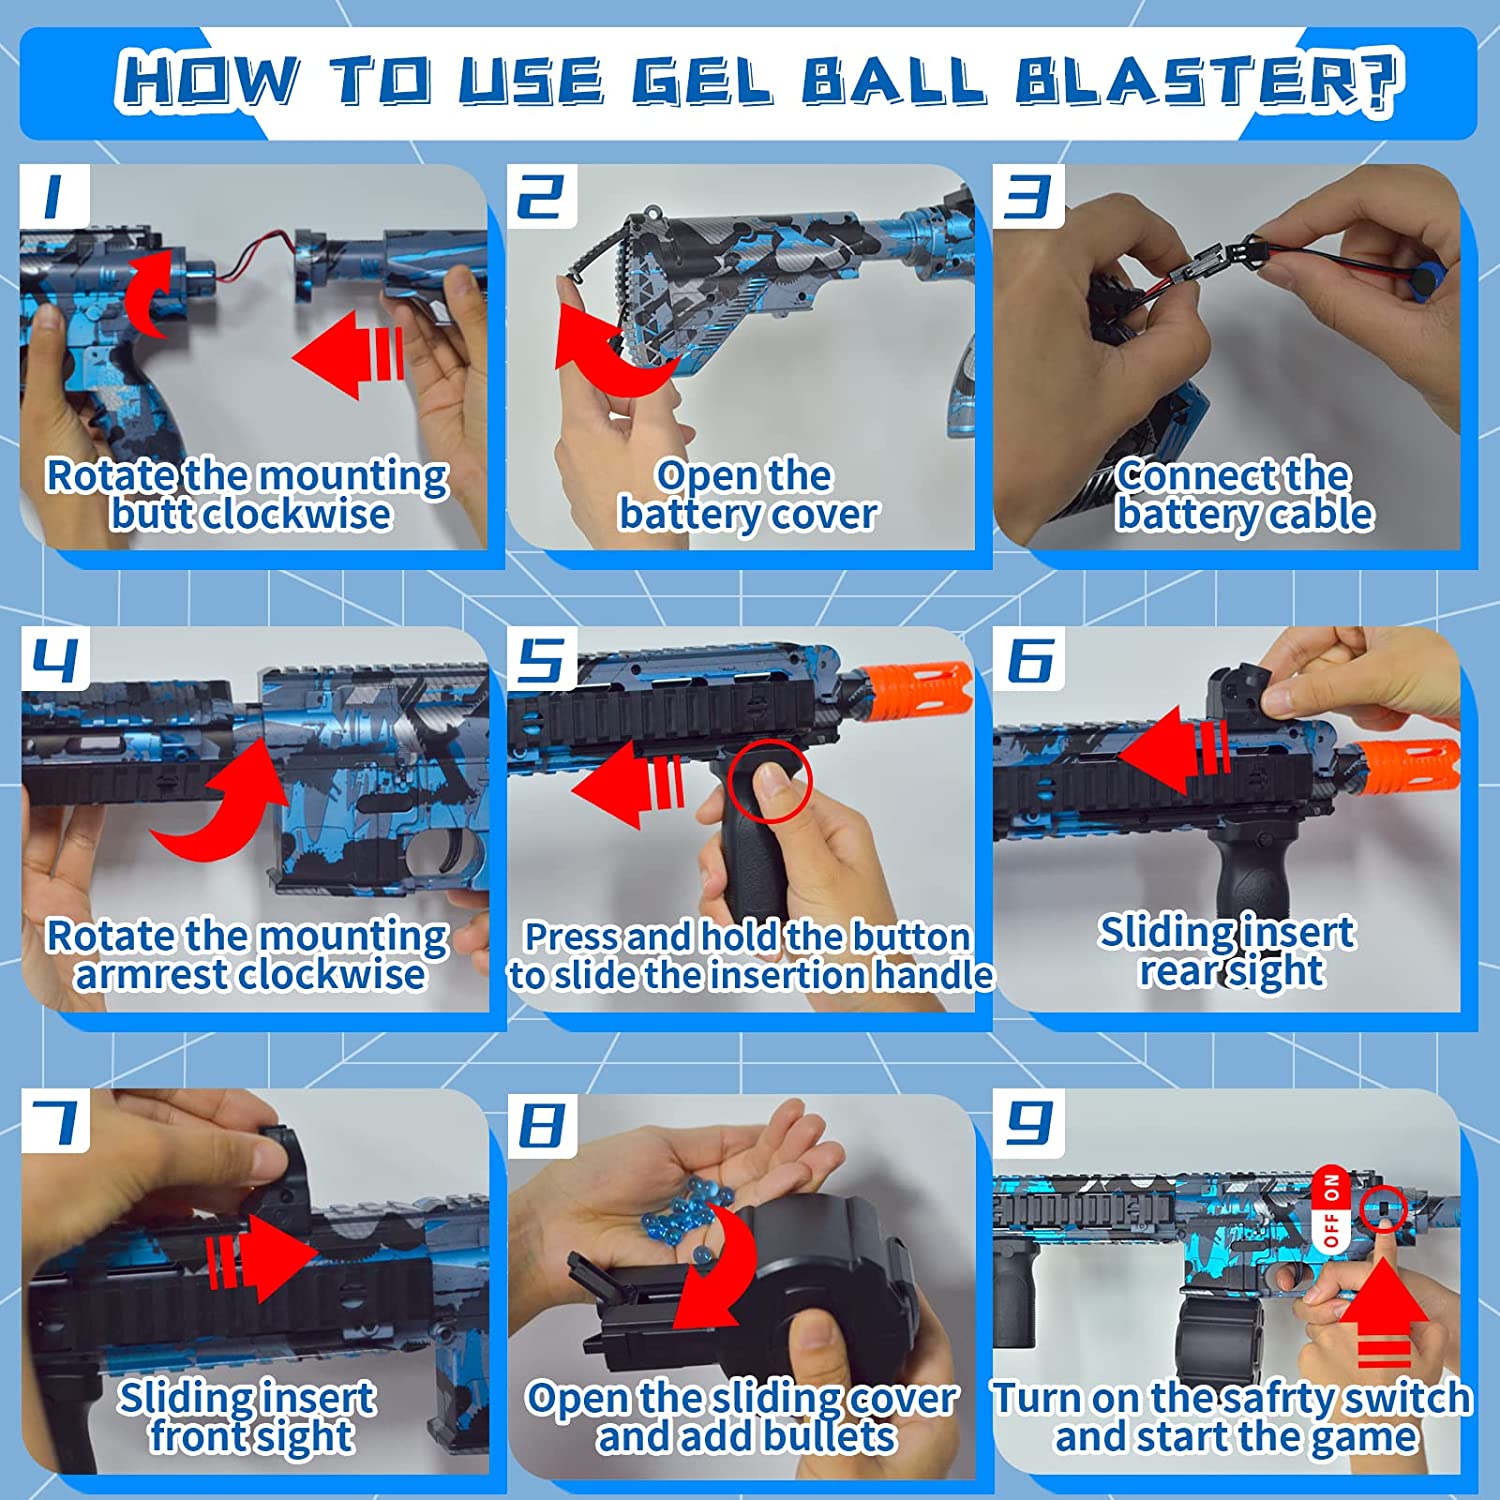 gel blaster eye protection